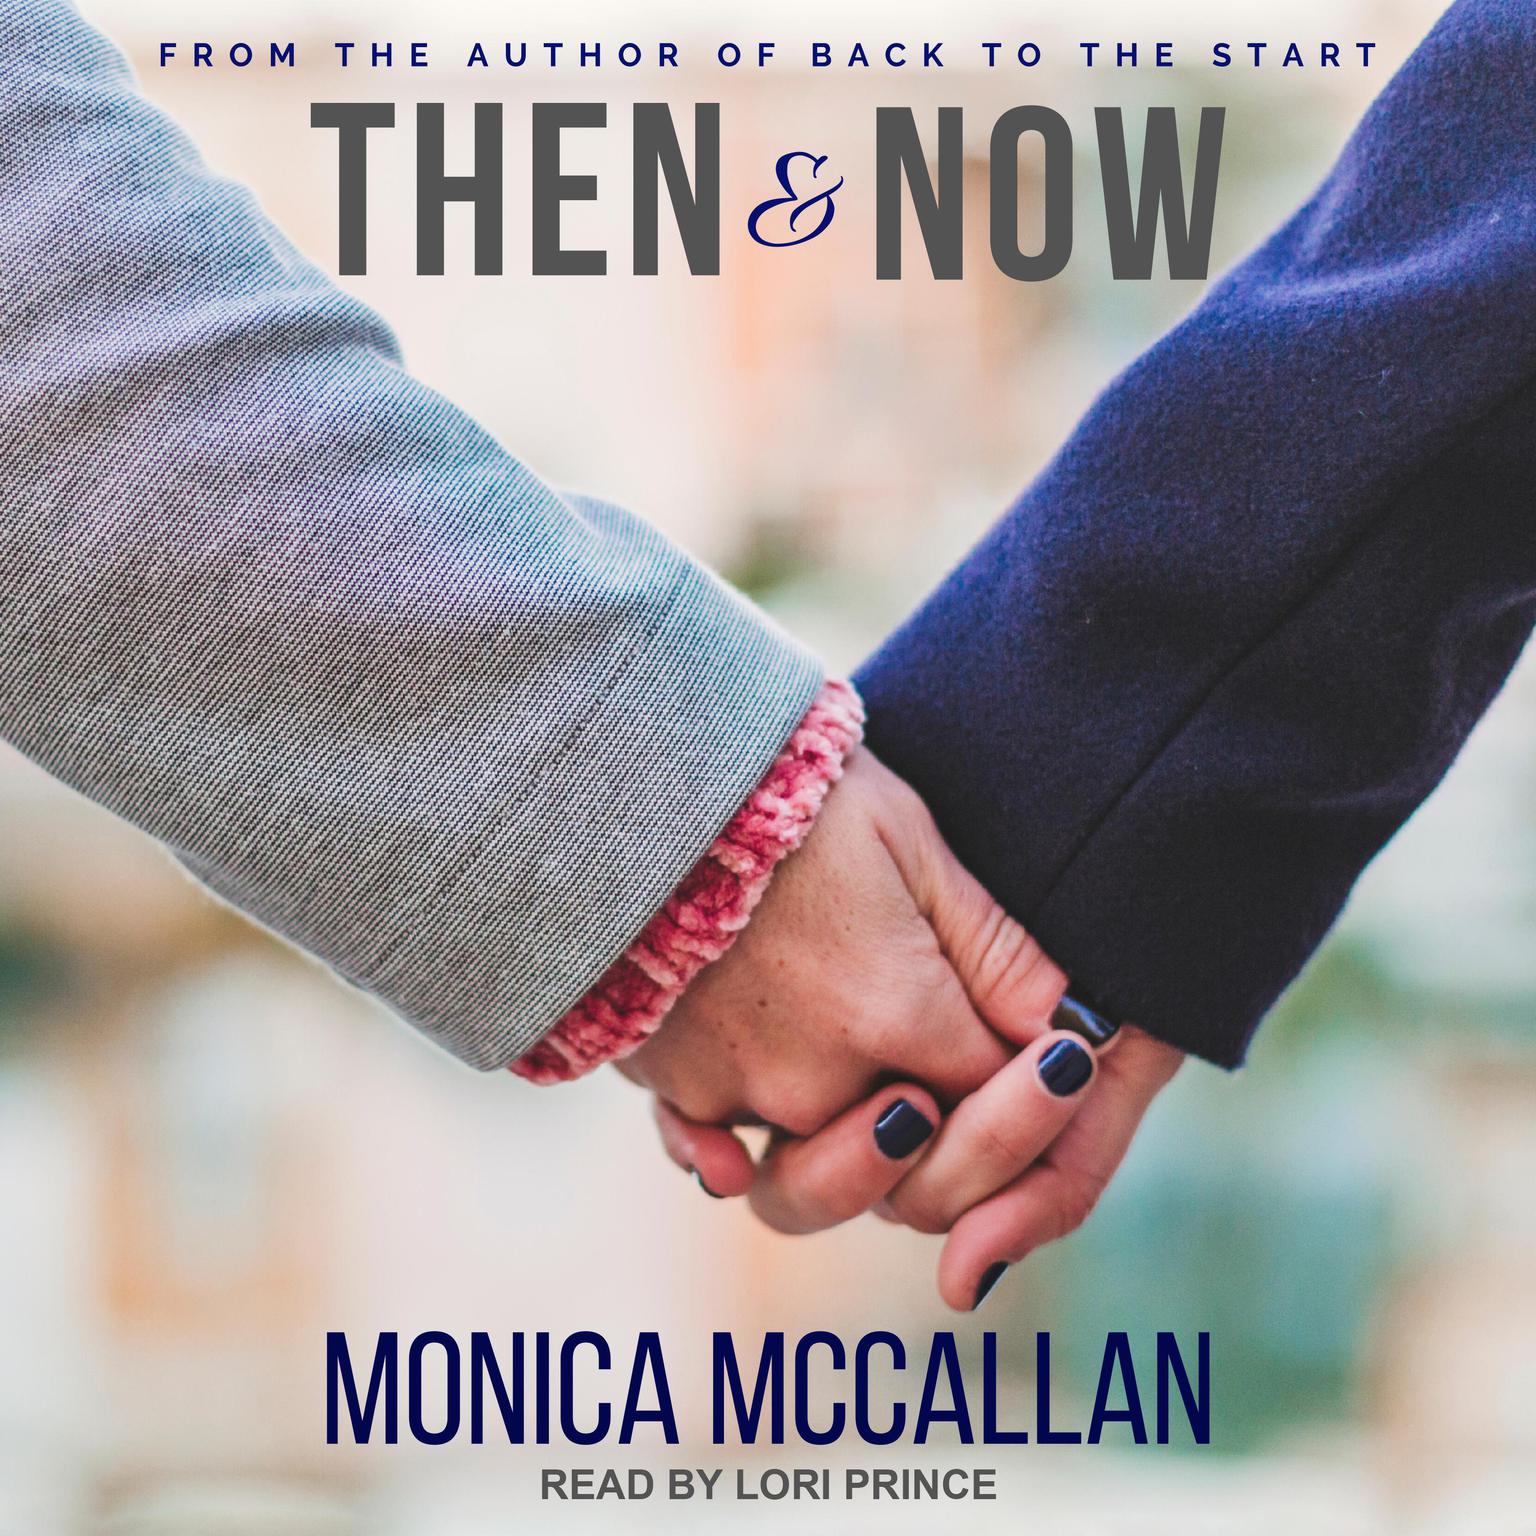 Monica McCallan, Lori Prince: Then & Now (AudiobookFormat, 2020, -)